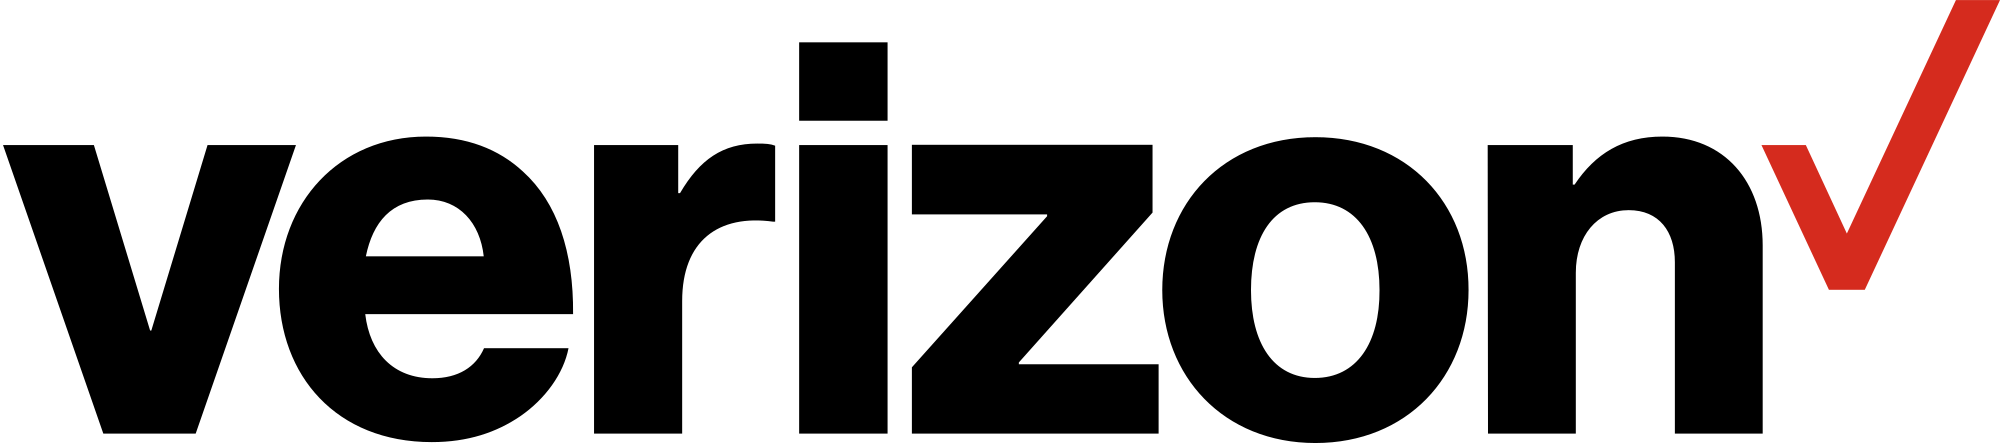 2000px-Verizon_2015_logo_-vector.svg